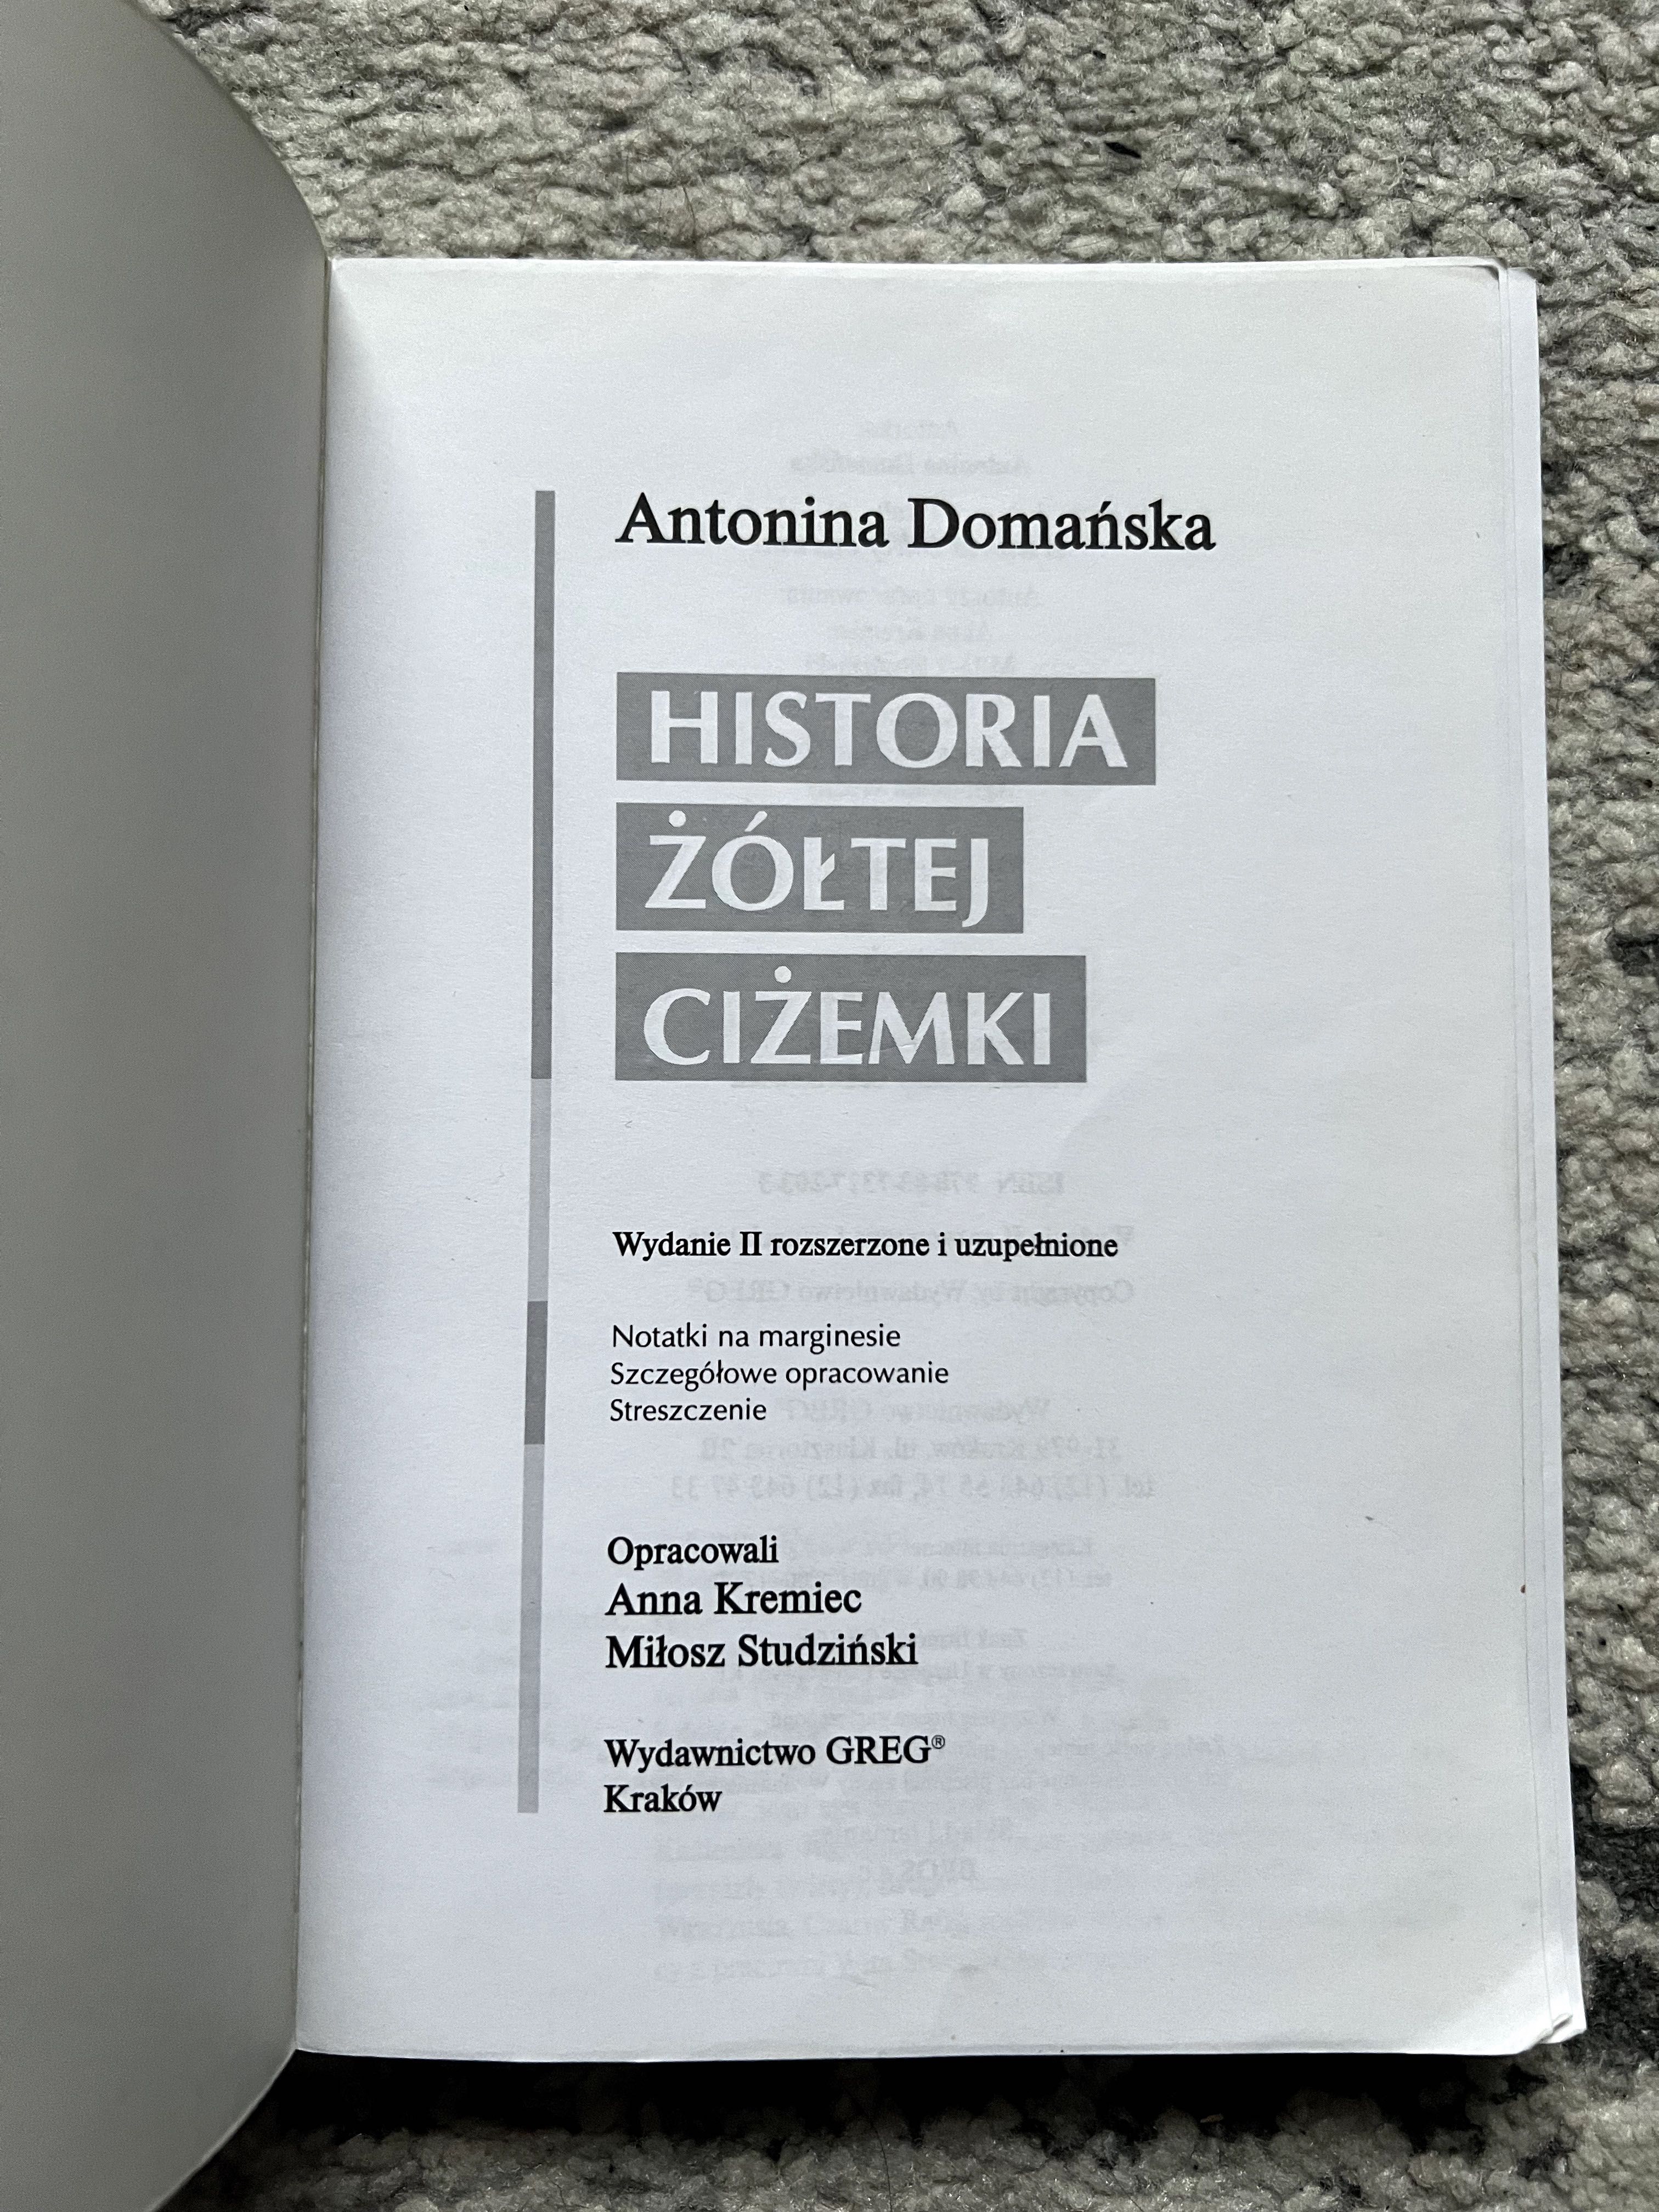 Antonia Domańska ,,Historia żółtej ciżemki" z opracowaniem, Greg